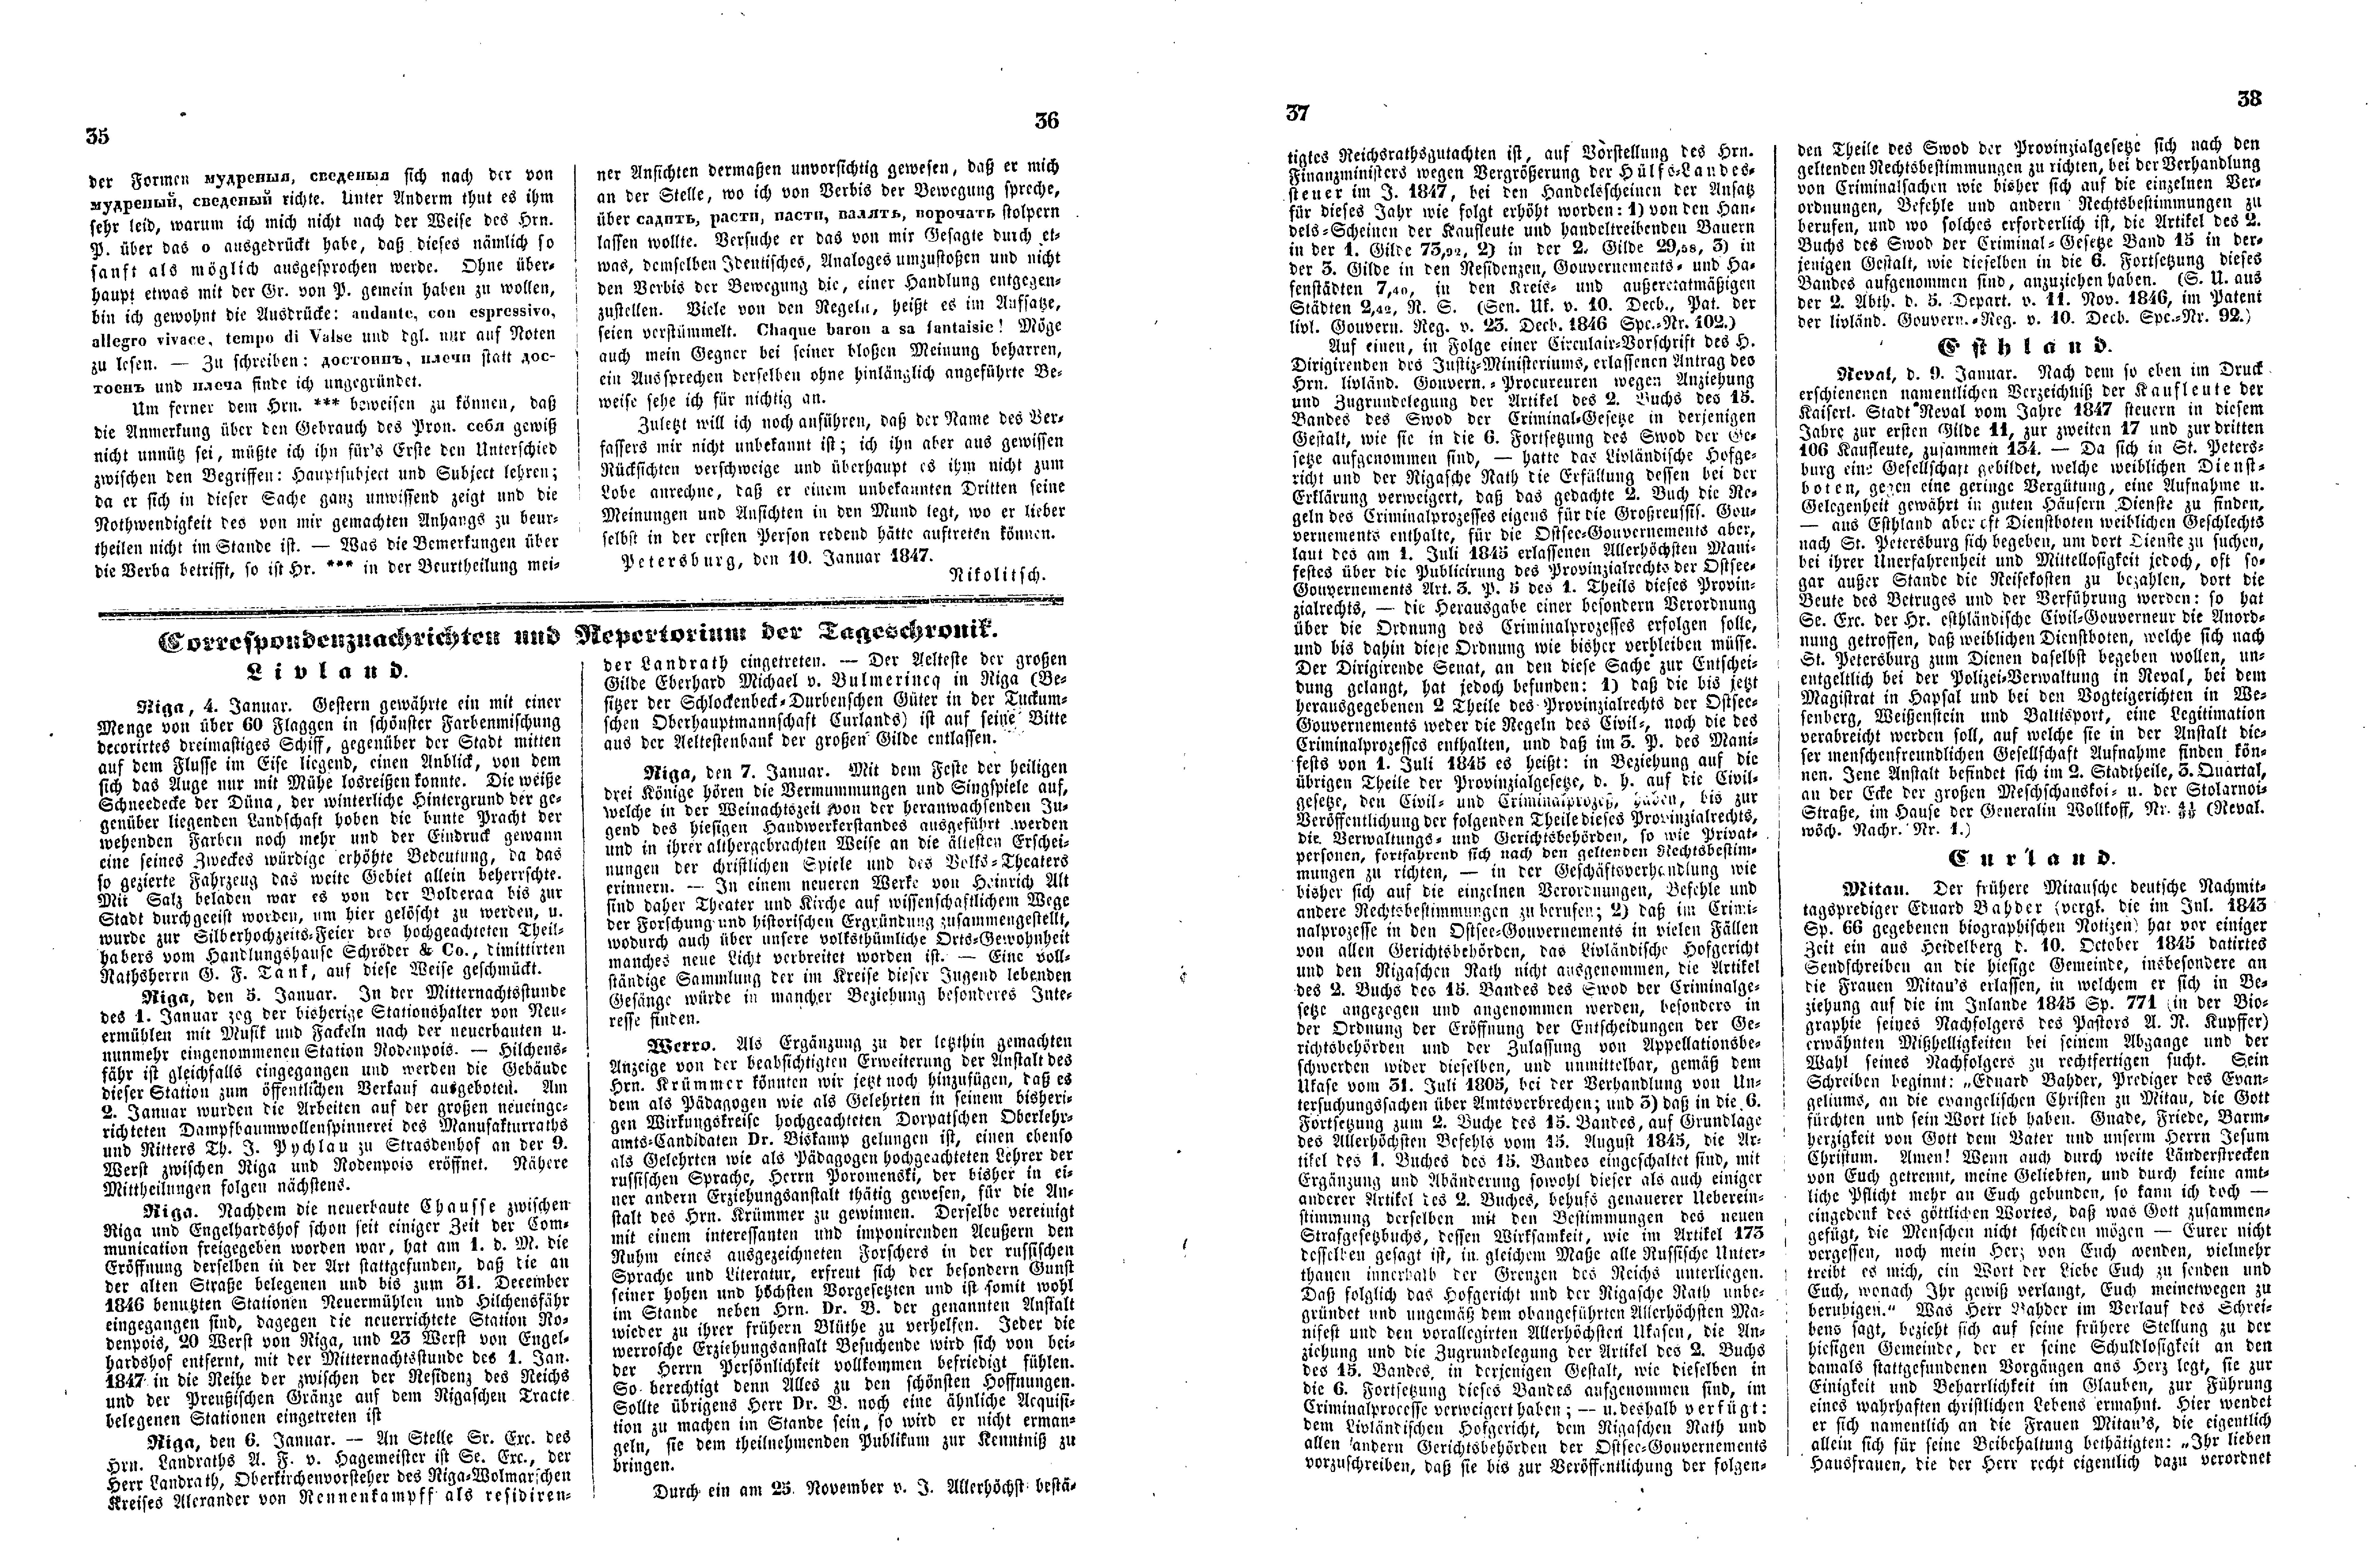 Das Inland [12] (1847) | 14. (35-38) Main body of text